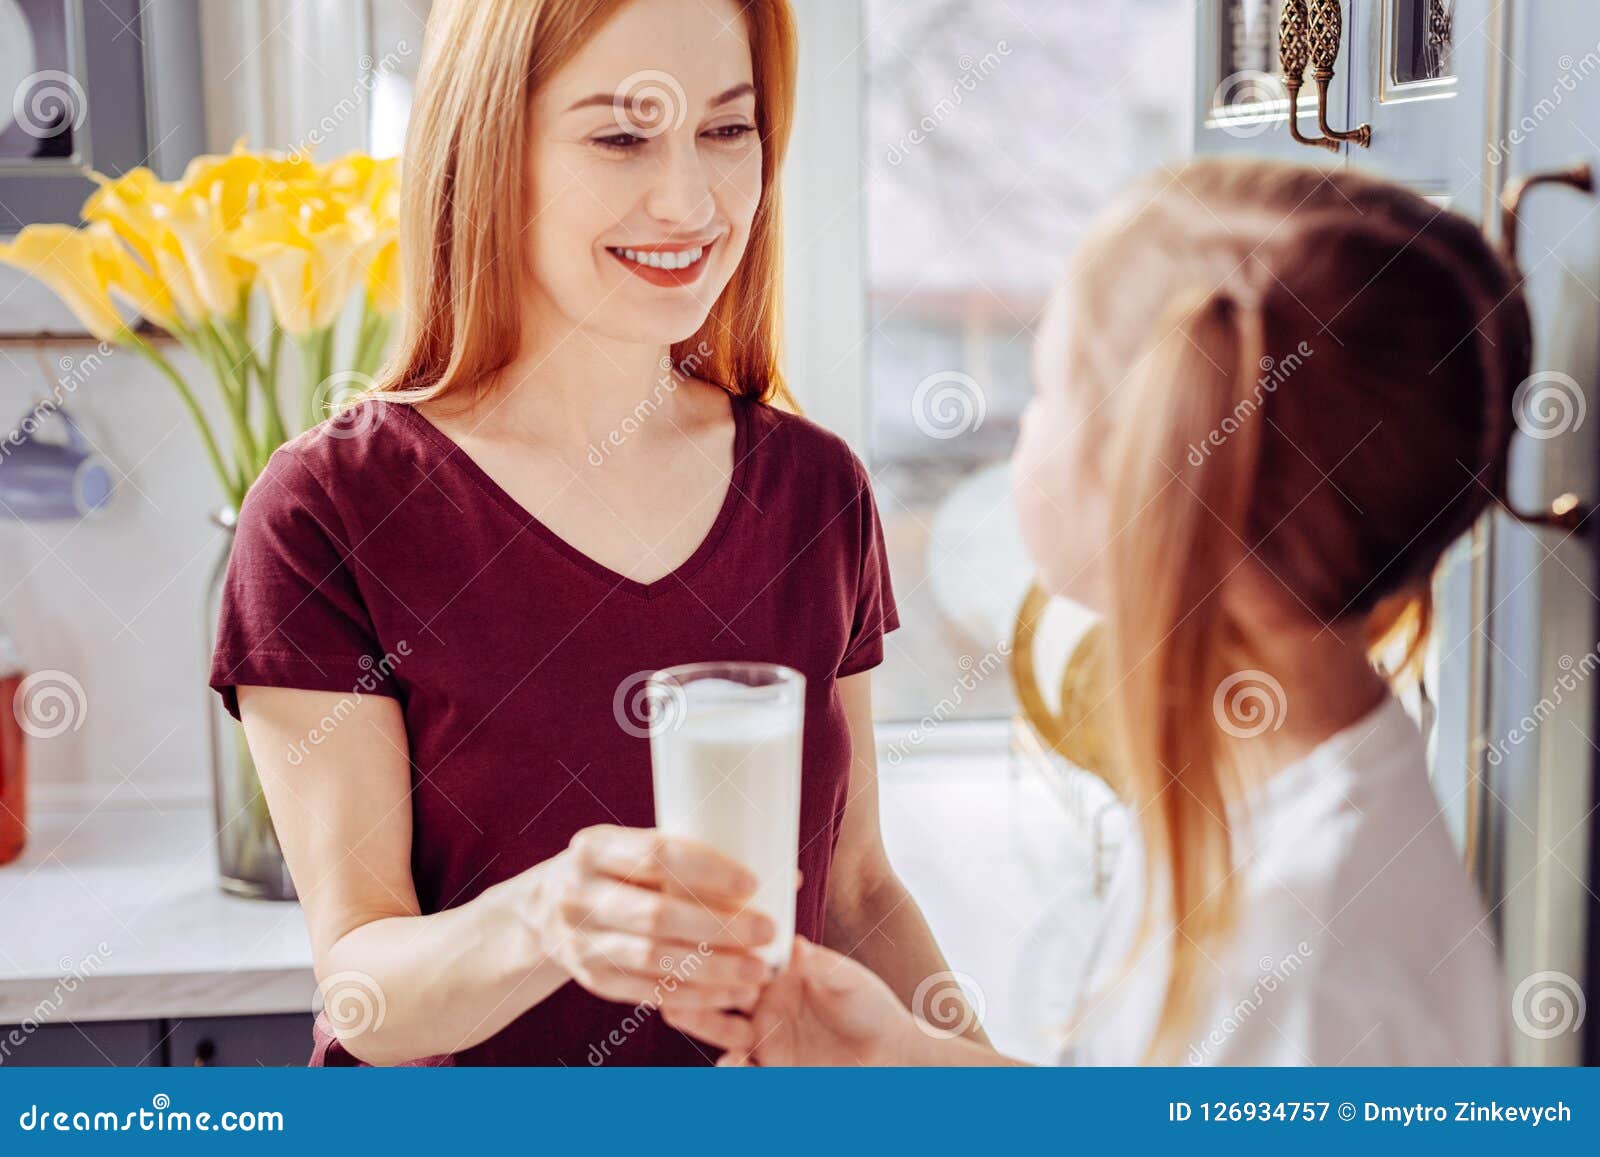 Daughters milk. Дочь Милк фото. Mom Milk taste. Milk to friends. What is Called girls giving Milk System.